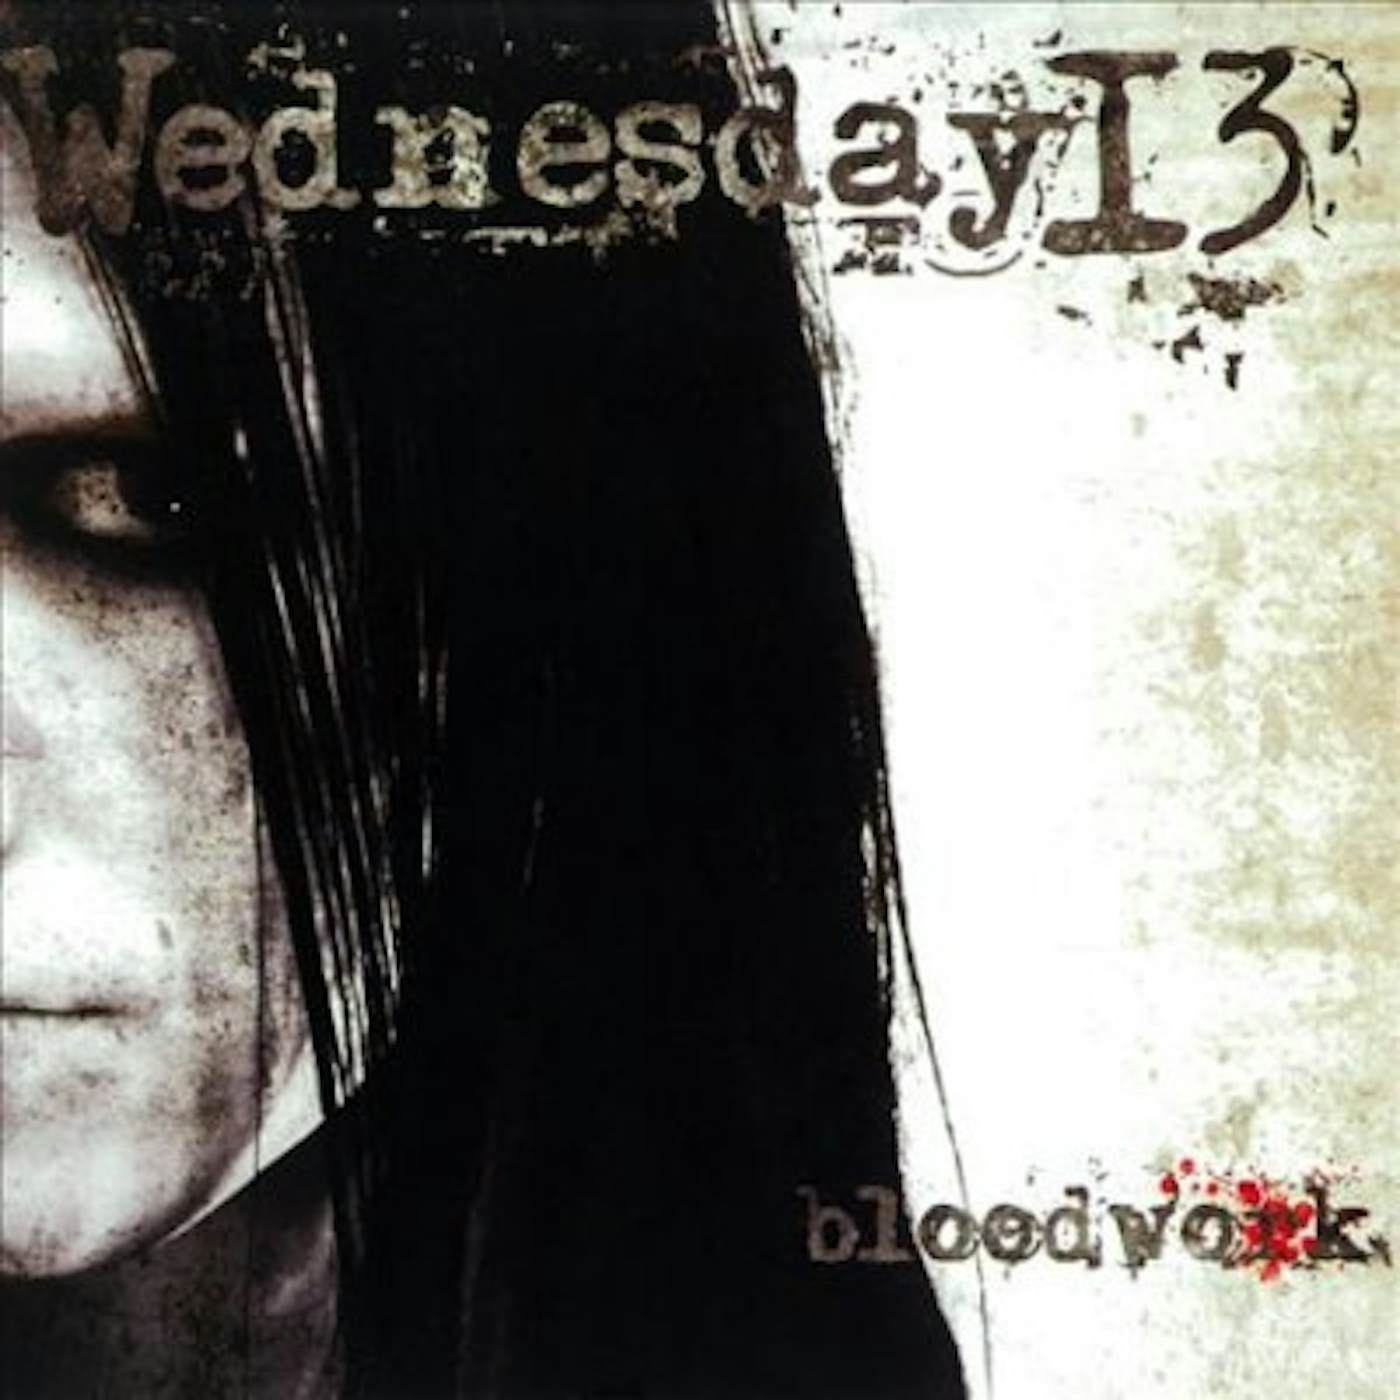 Wednesday 13 BLOODWORK CD